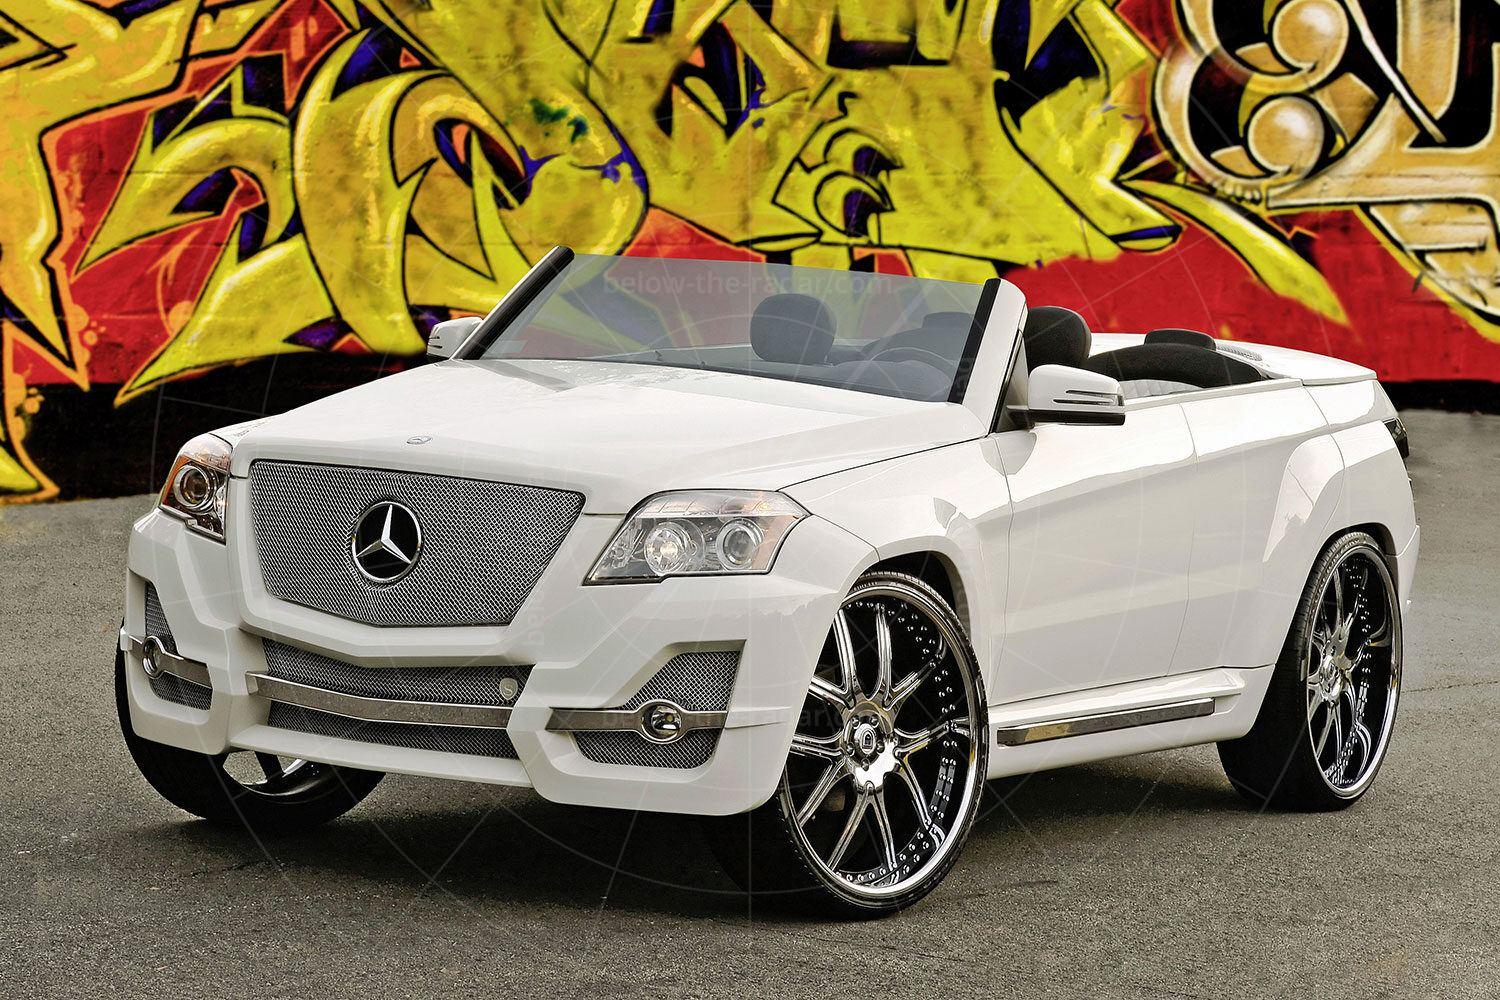 Mercedes GLK Urban Whip Pic: Mercedes | Mercedes GLK Urban Whip